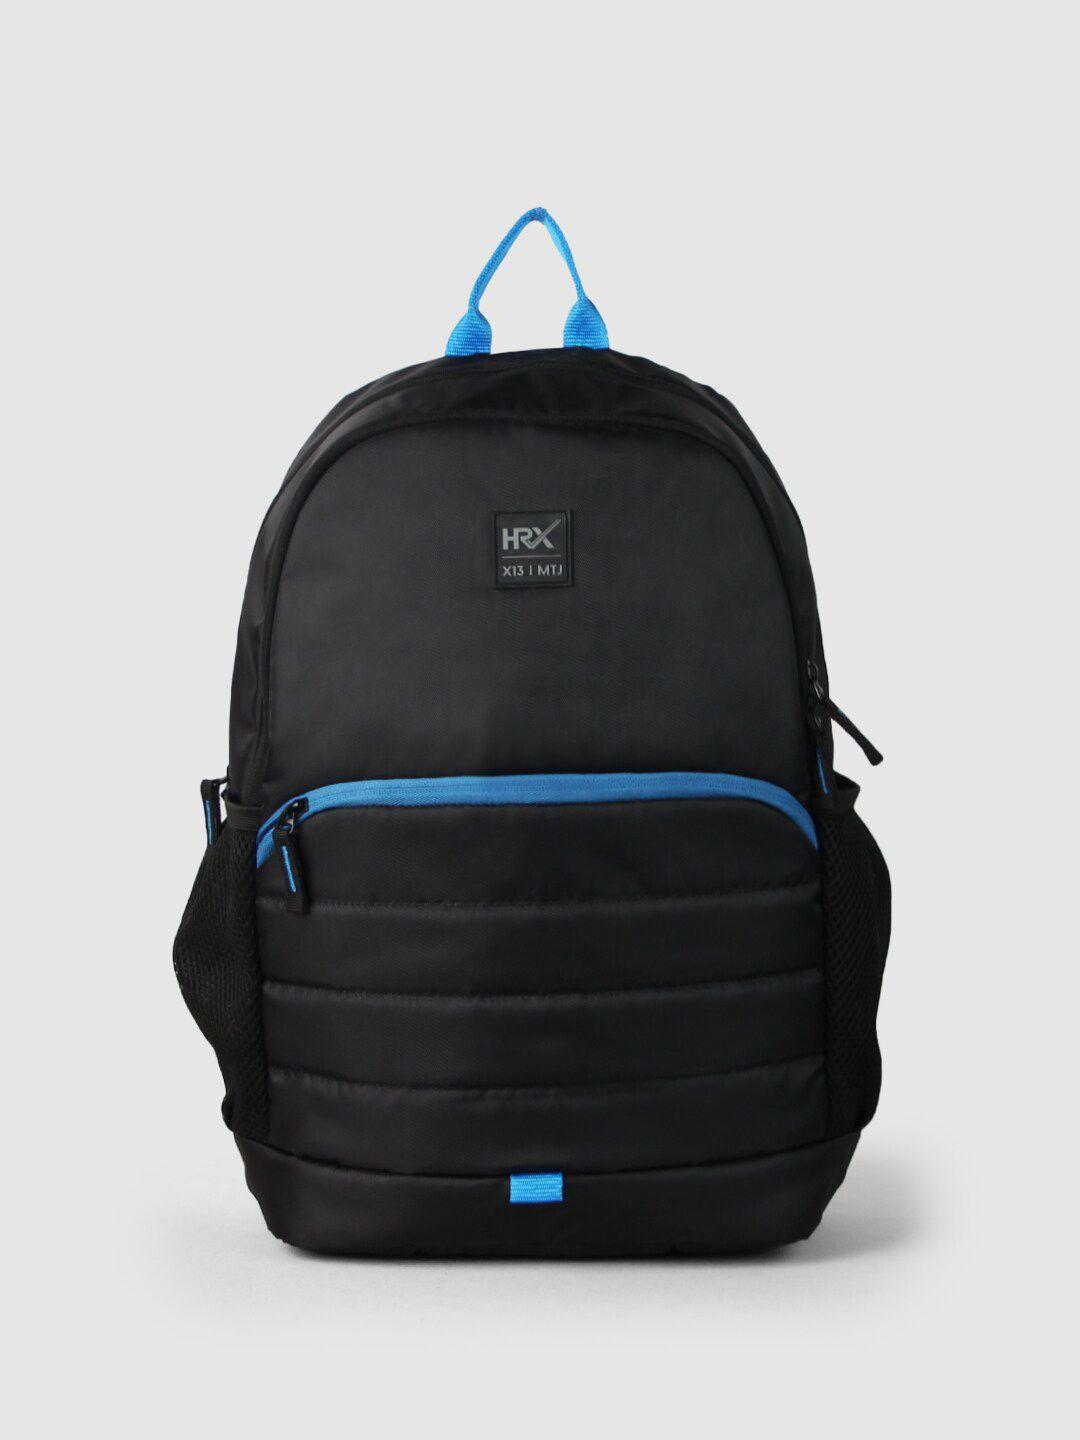 hrx by hrithik roshan black & blue medium size backpack